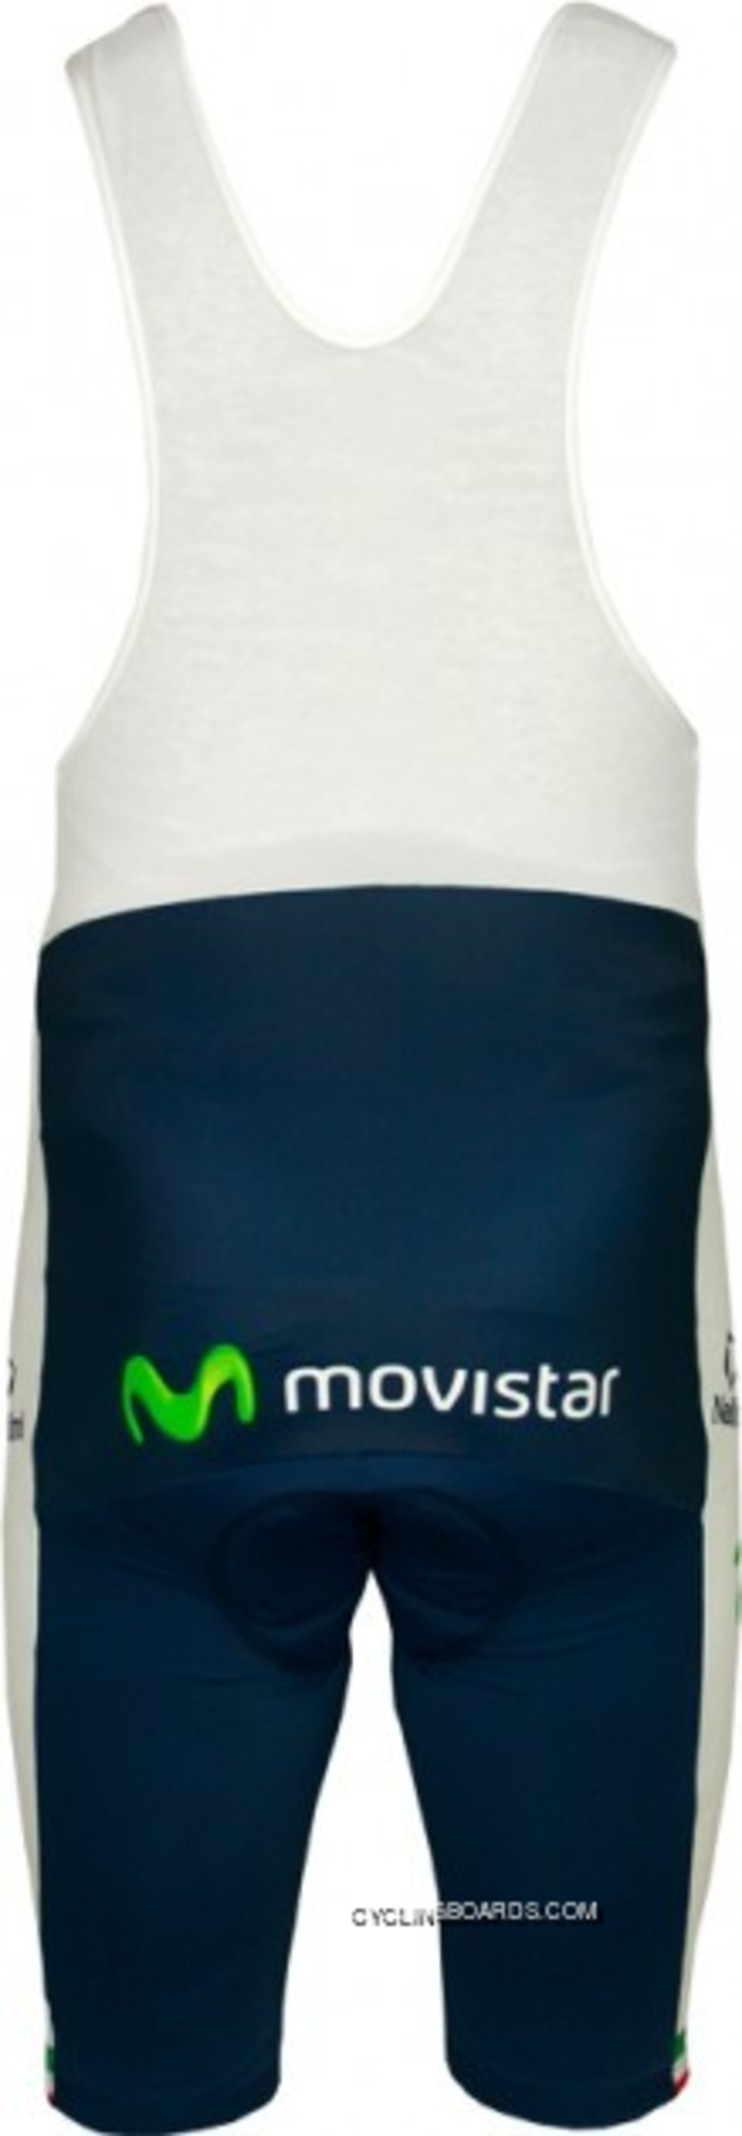 Movistar Italienischer Meister 2012 Bib Shorts - Radsport-Profi-Team Free Shipping